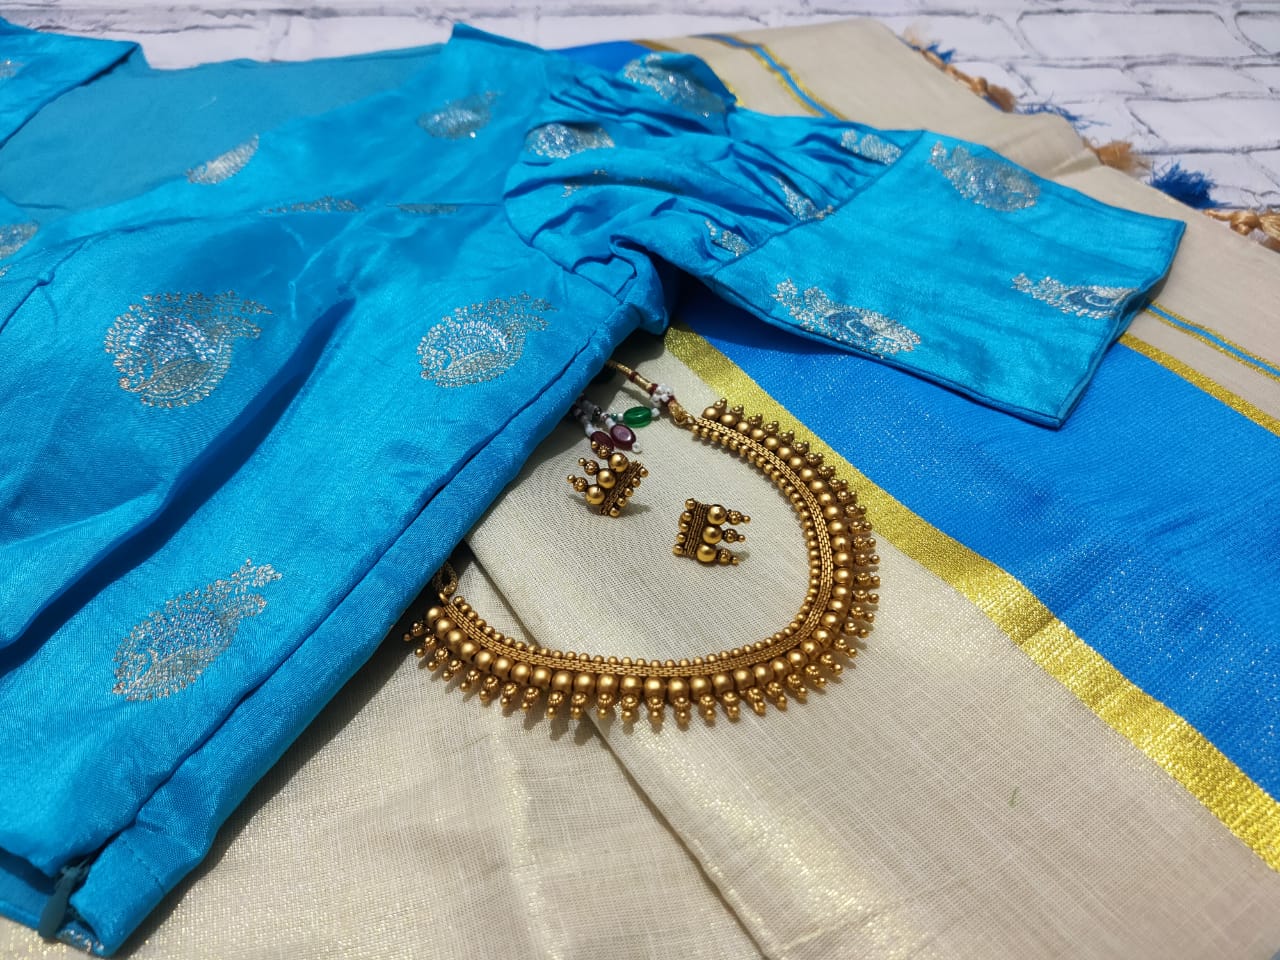 d4f07-sruthinair-hdfg | Vintage Indian Clothing